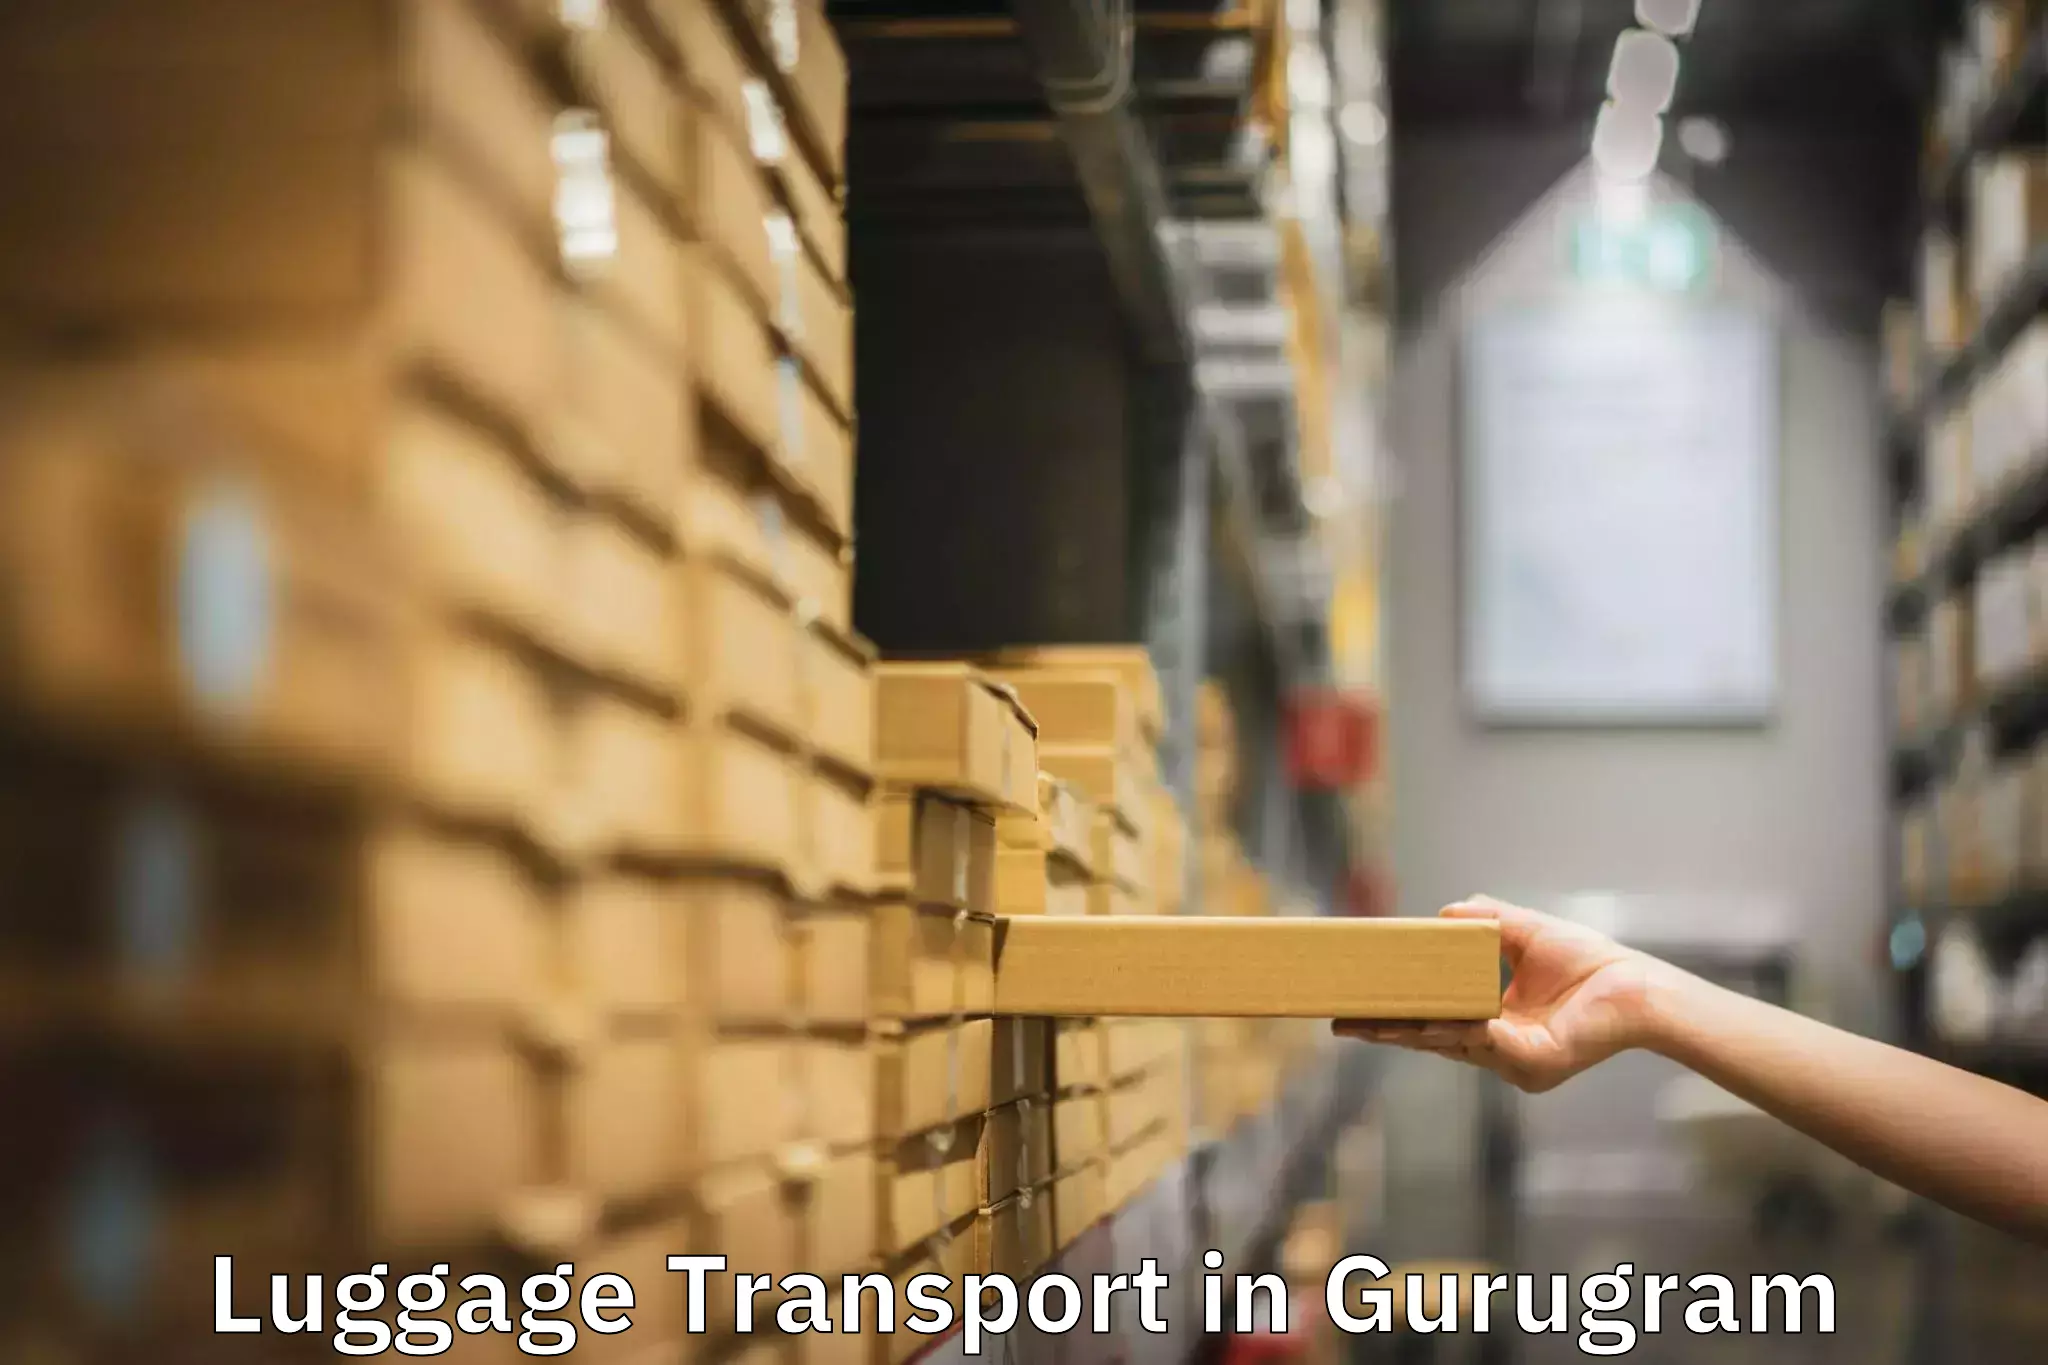 Luggage transport operations in Gurugram